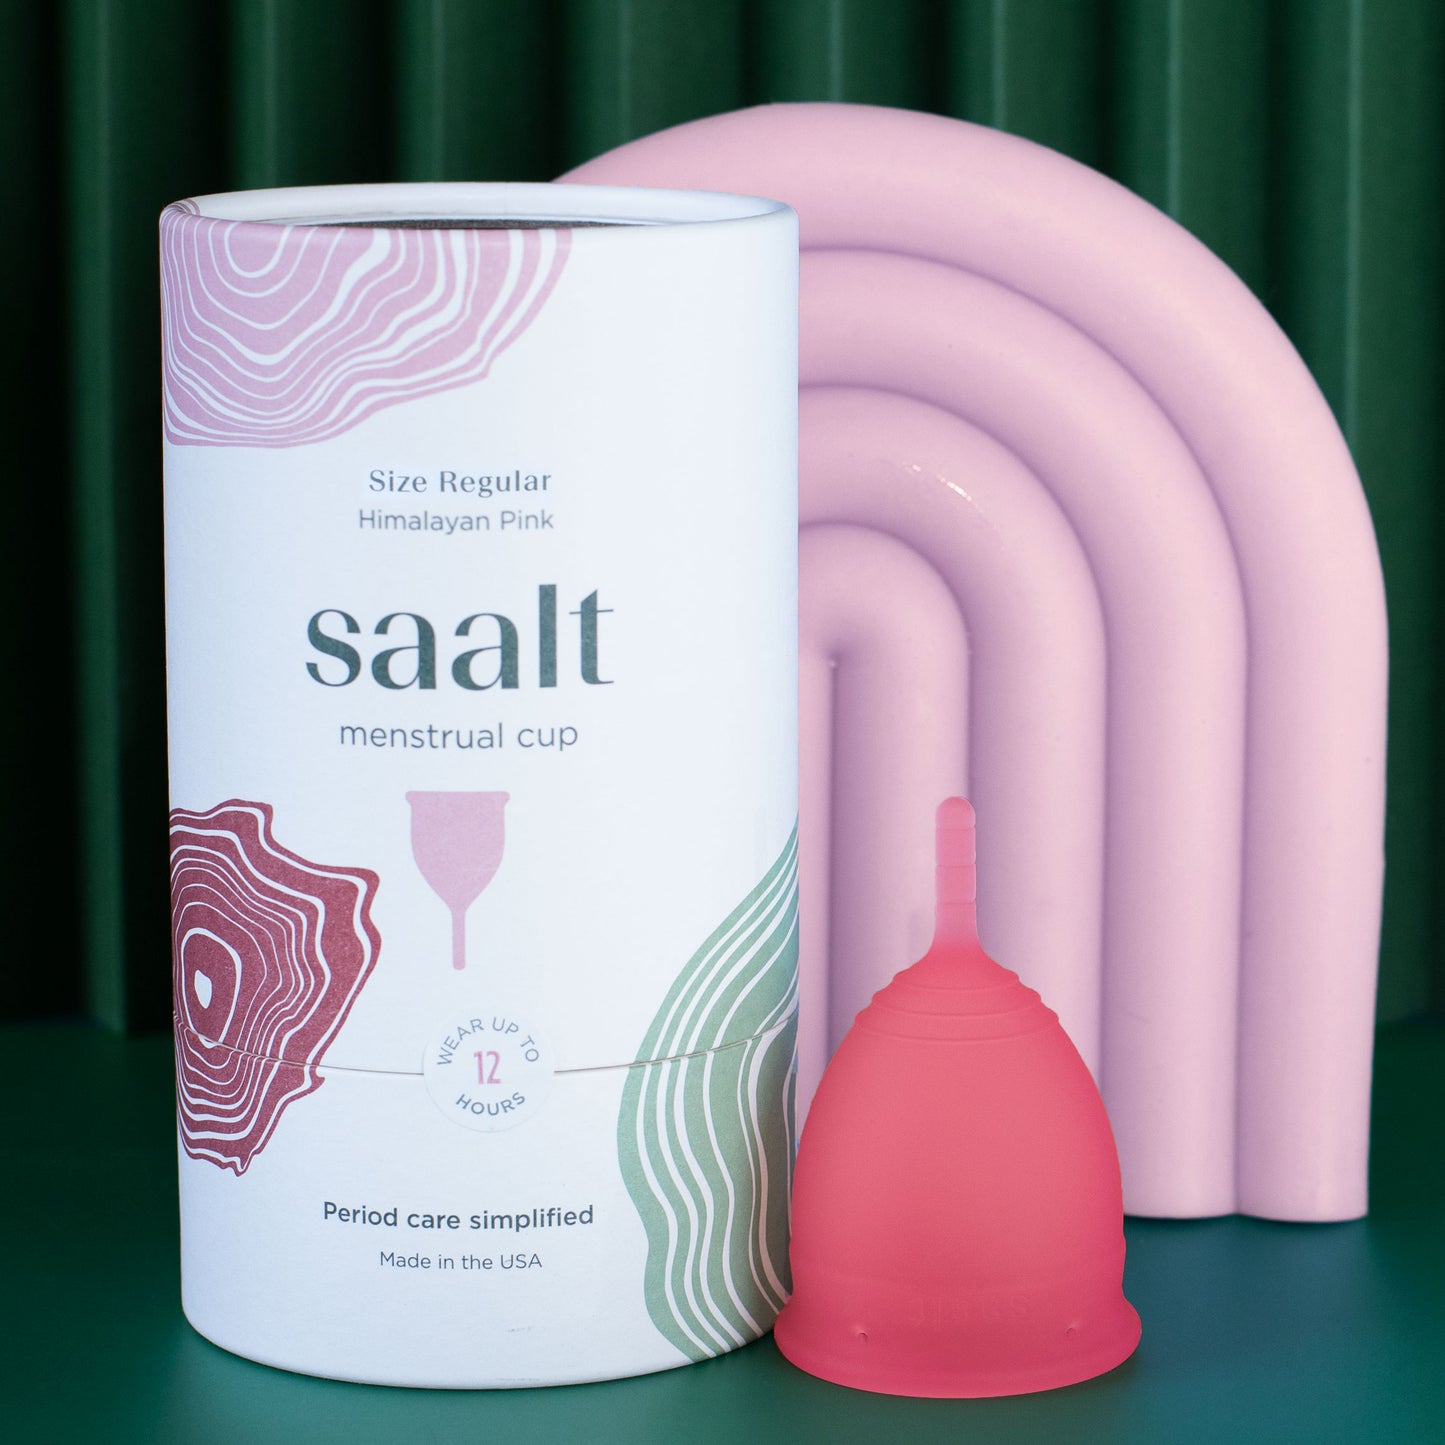 Saalt Regular in Himalayan Pink with packaging